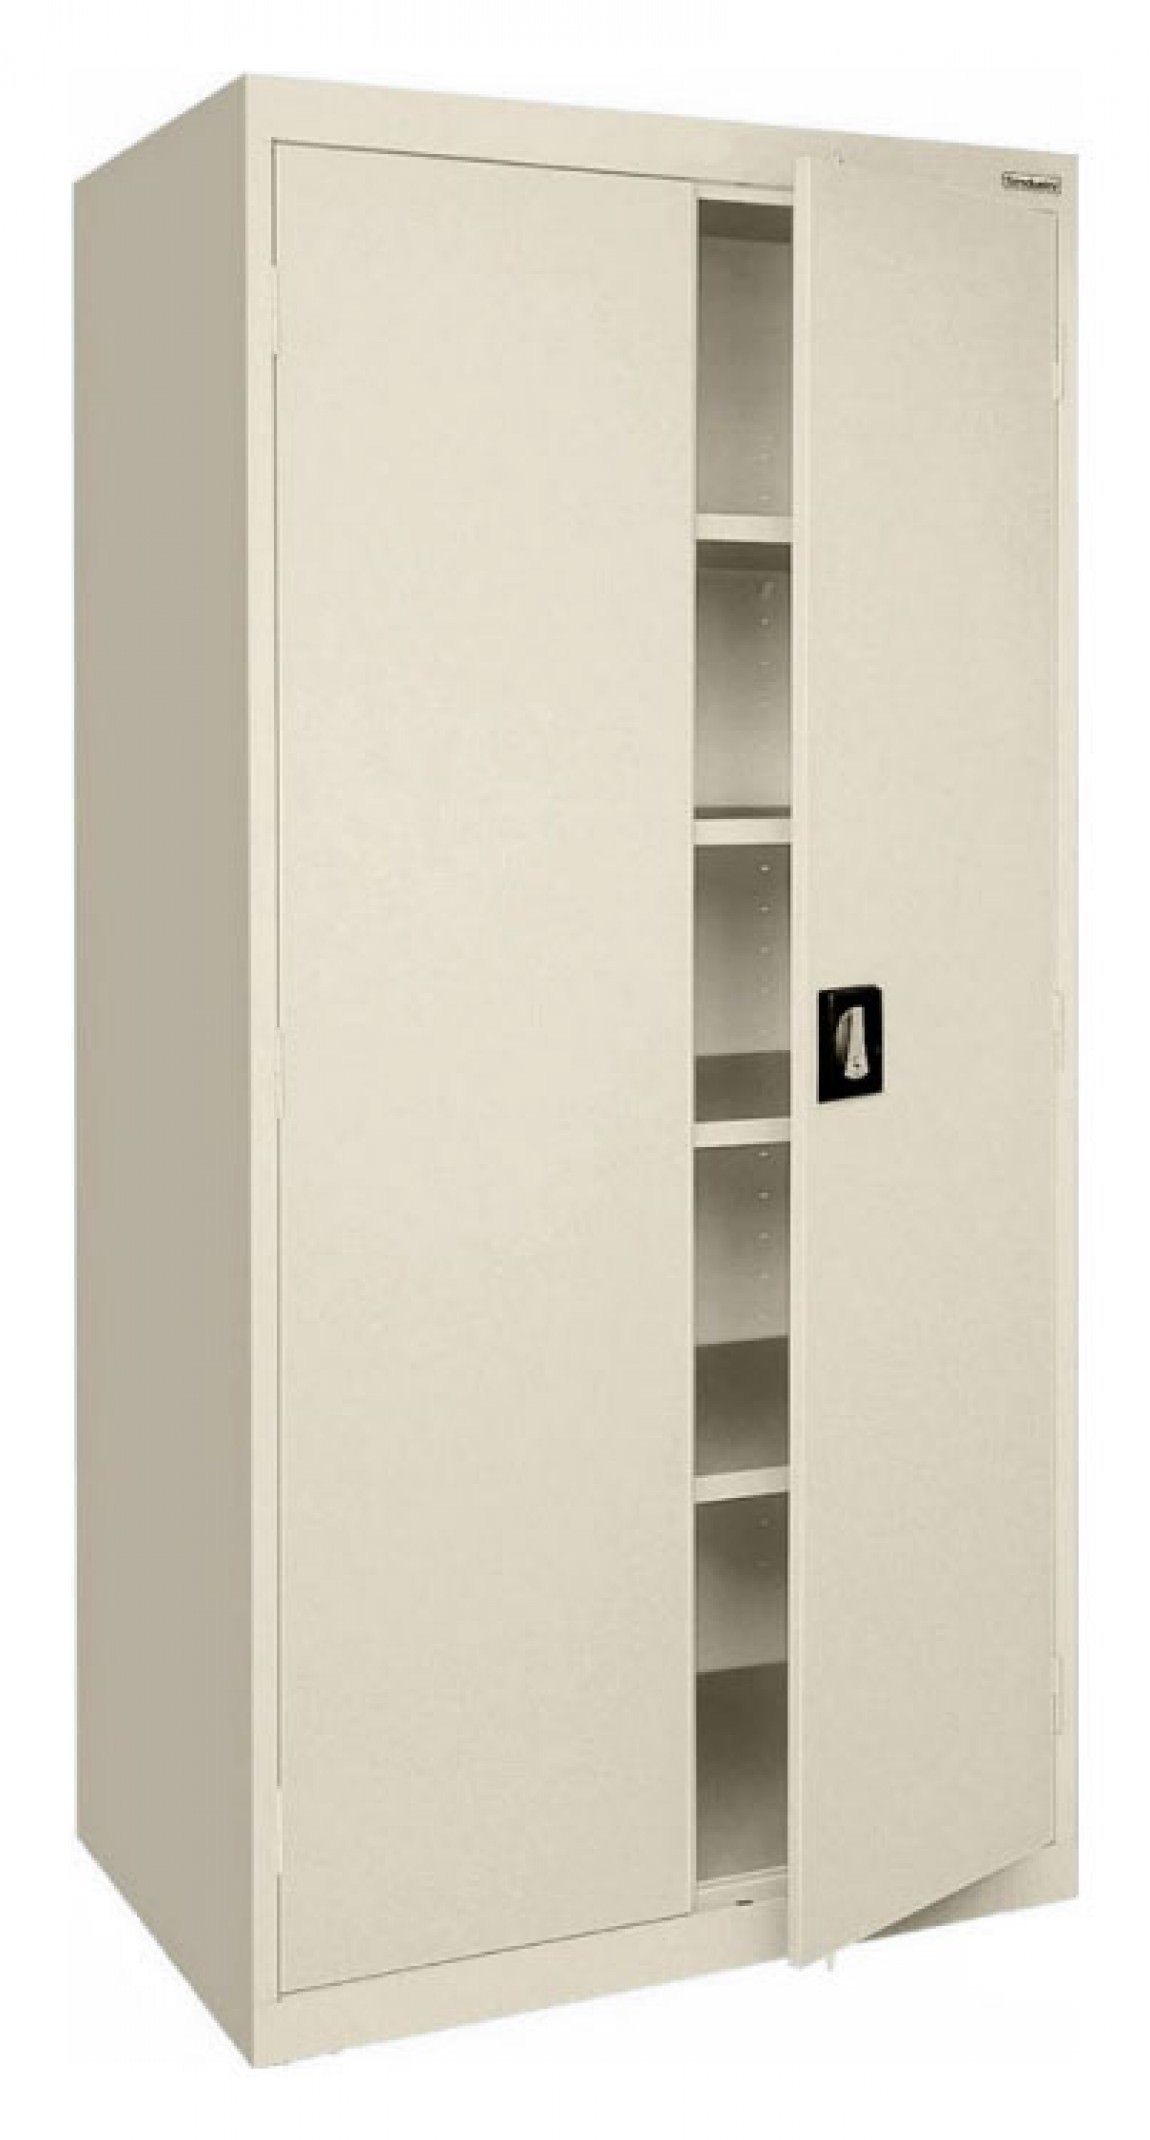 https://madisonliquidators.com/images/p/1150/34269-tall-storage-cabinet-1.jpg